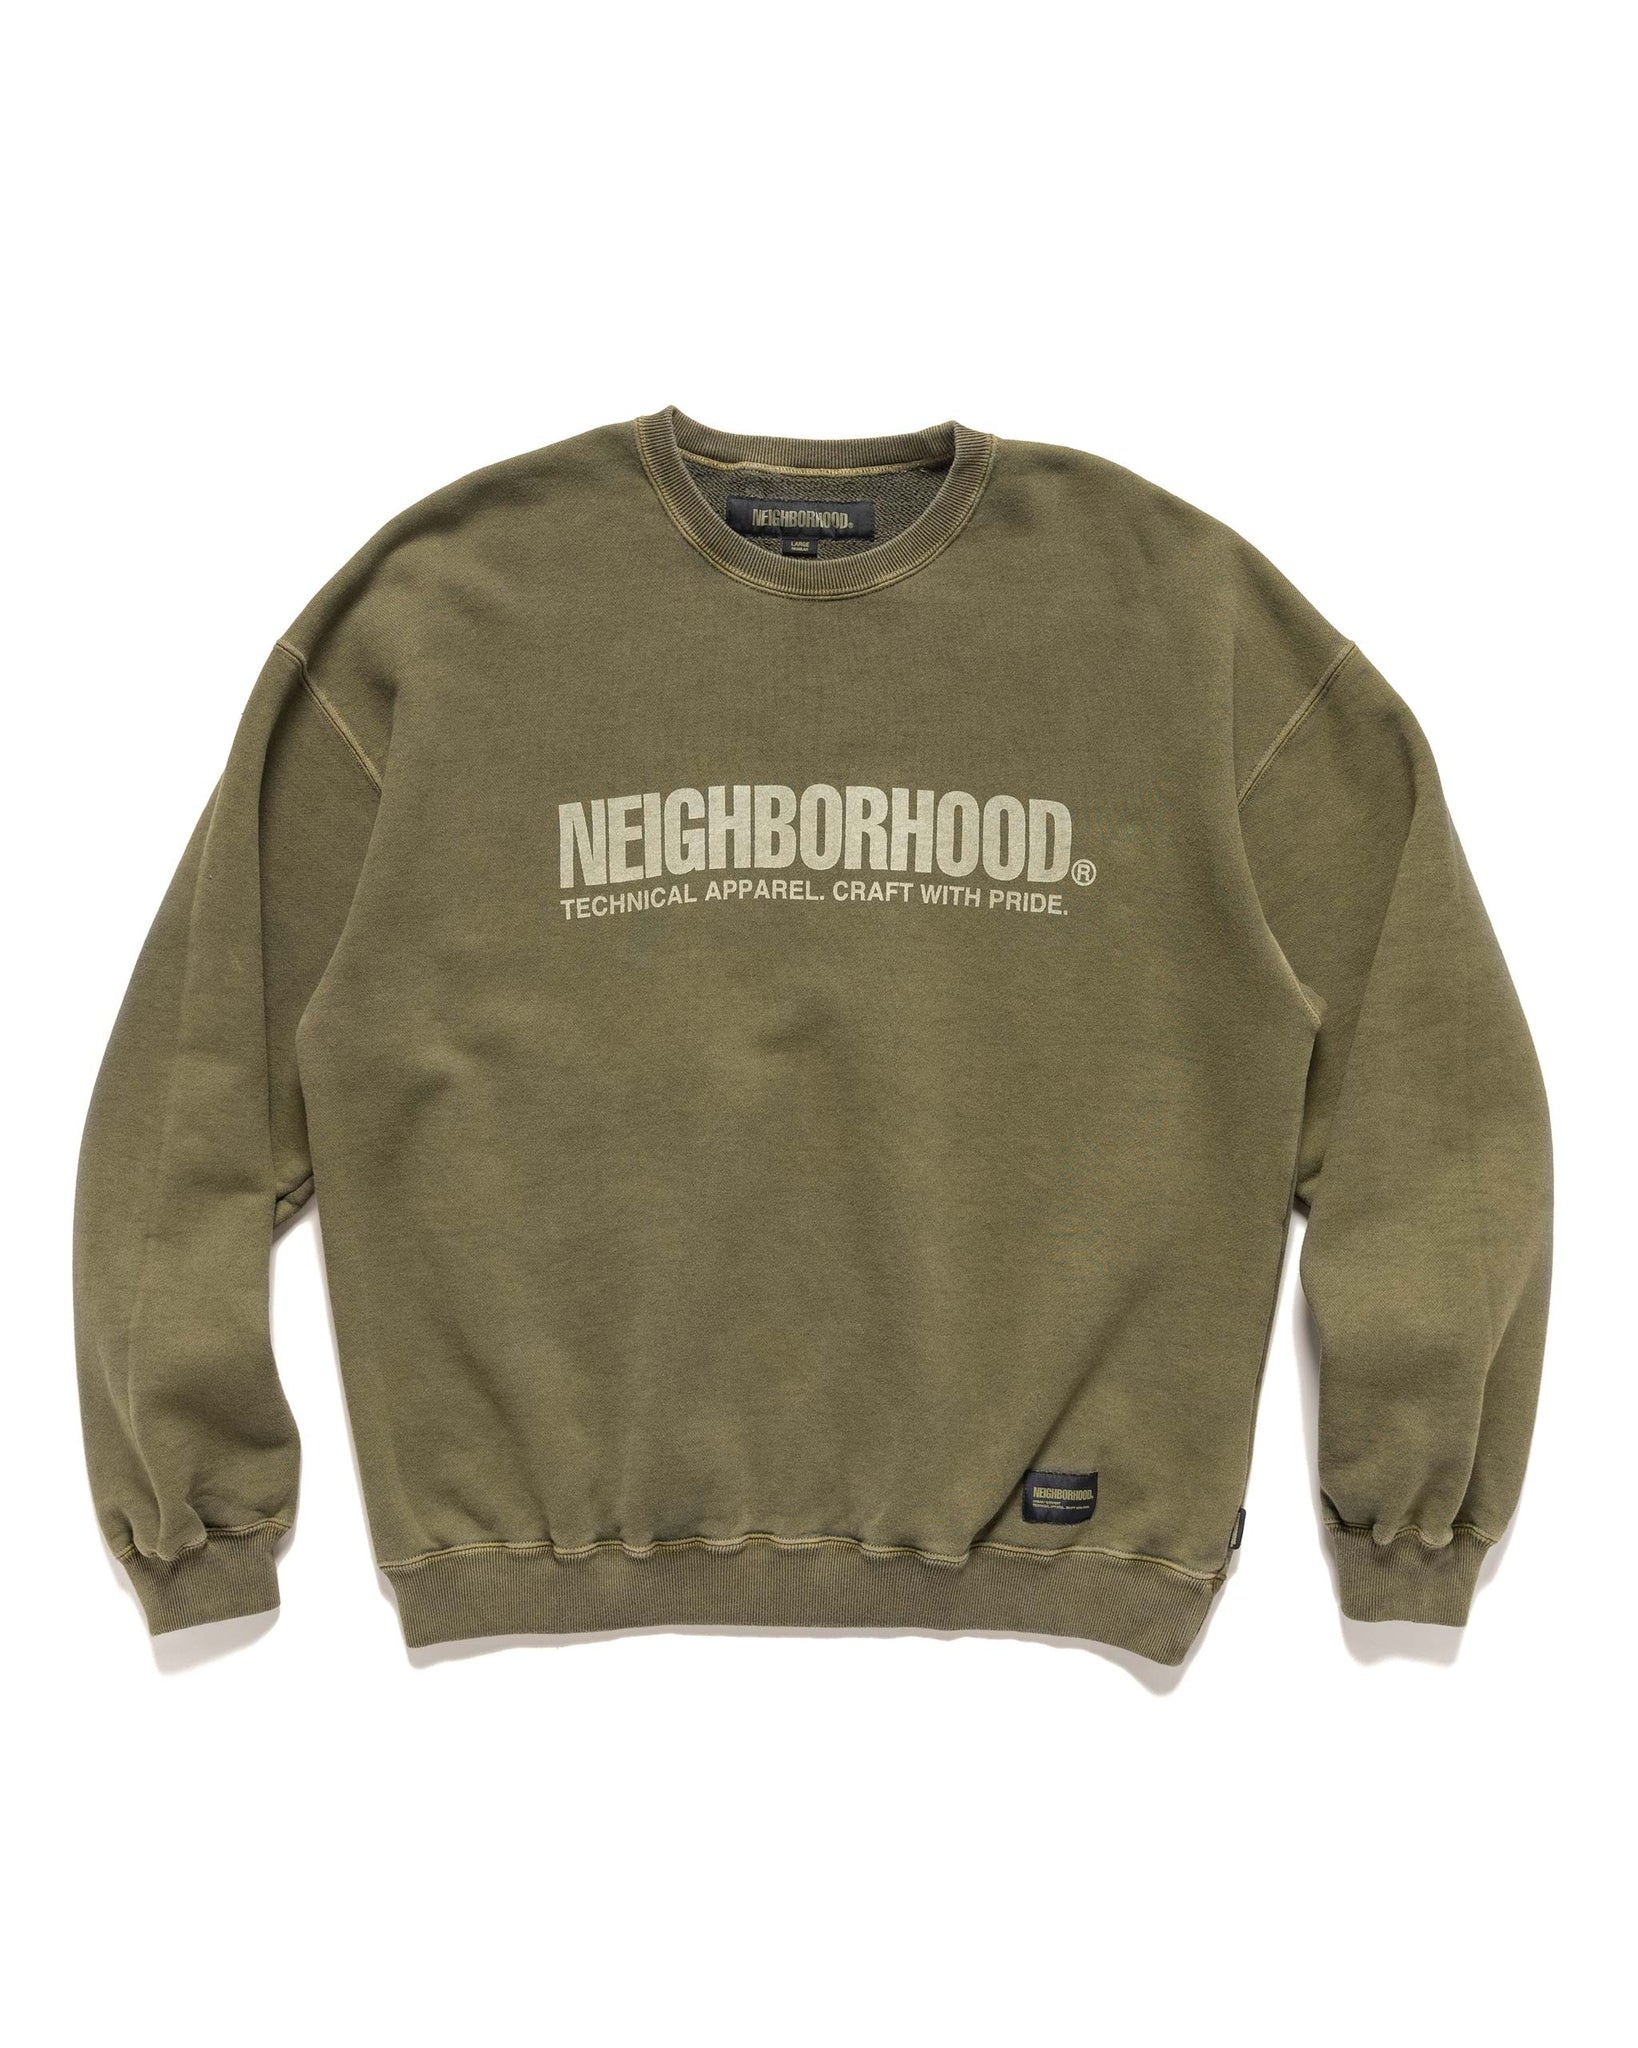 NEIGHBORHOOD Pigment Dyed Sweatshirt LS Olive Drab | REVERSIBLE